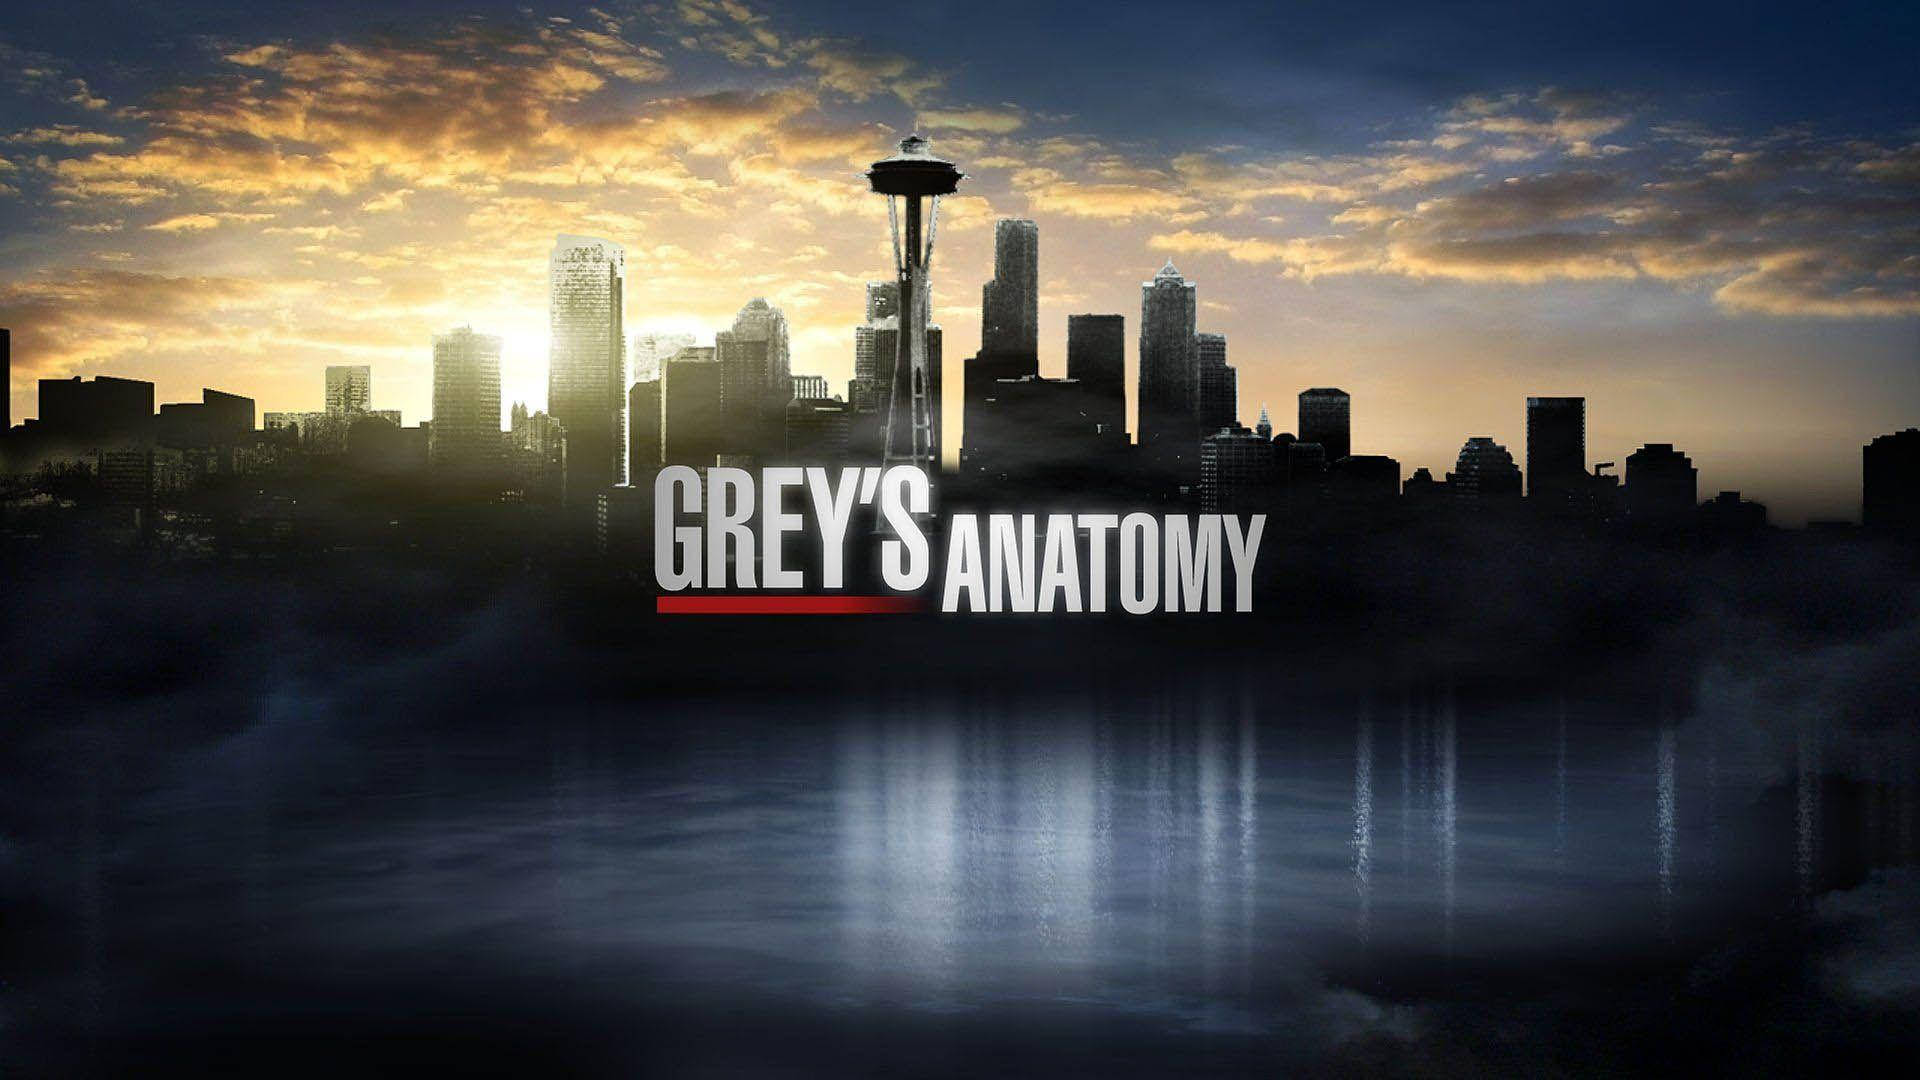 Grey's Anatomy Space Needle Background